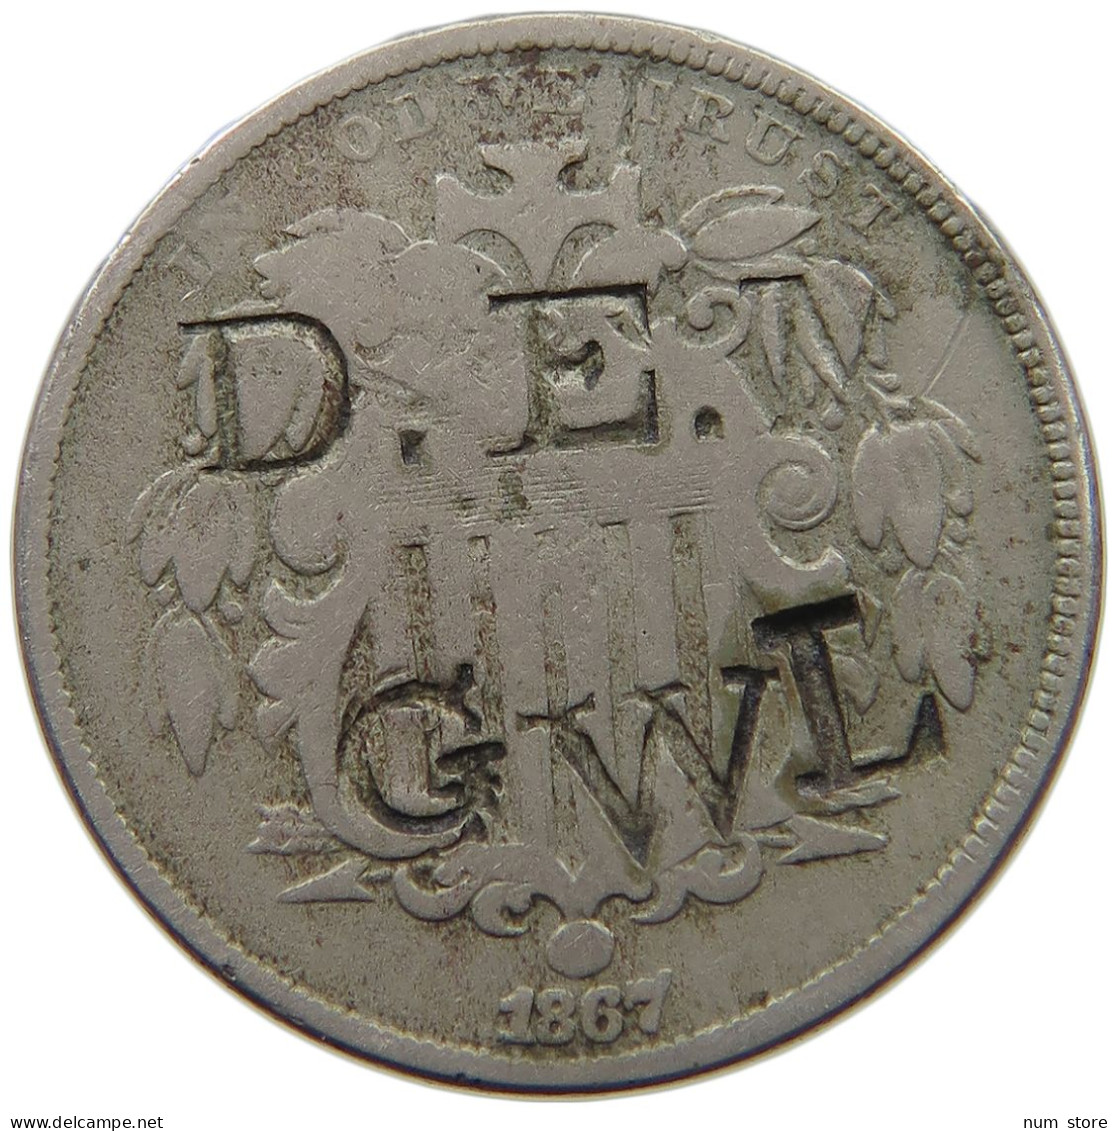 UNITED STATES OF AMERICA NICKEL 1867 COUNTERMARKED DEM / DEM GWL #t001 0241 - 1866-83: Shield